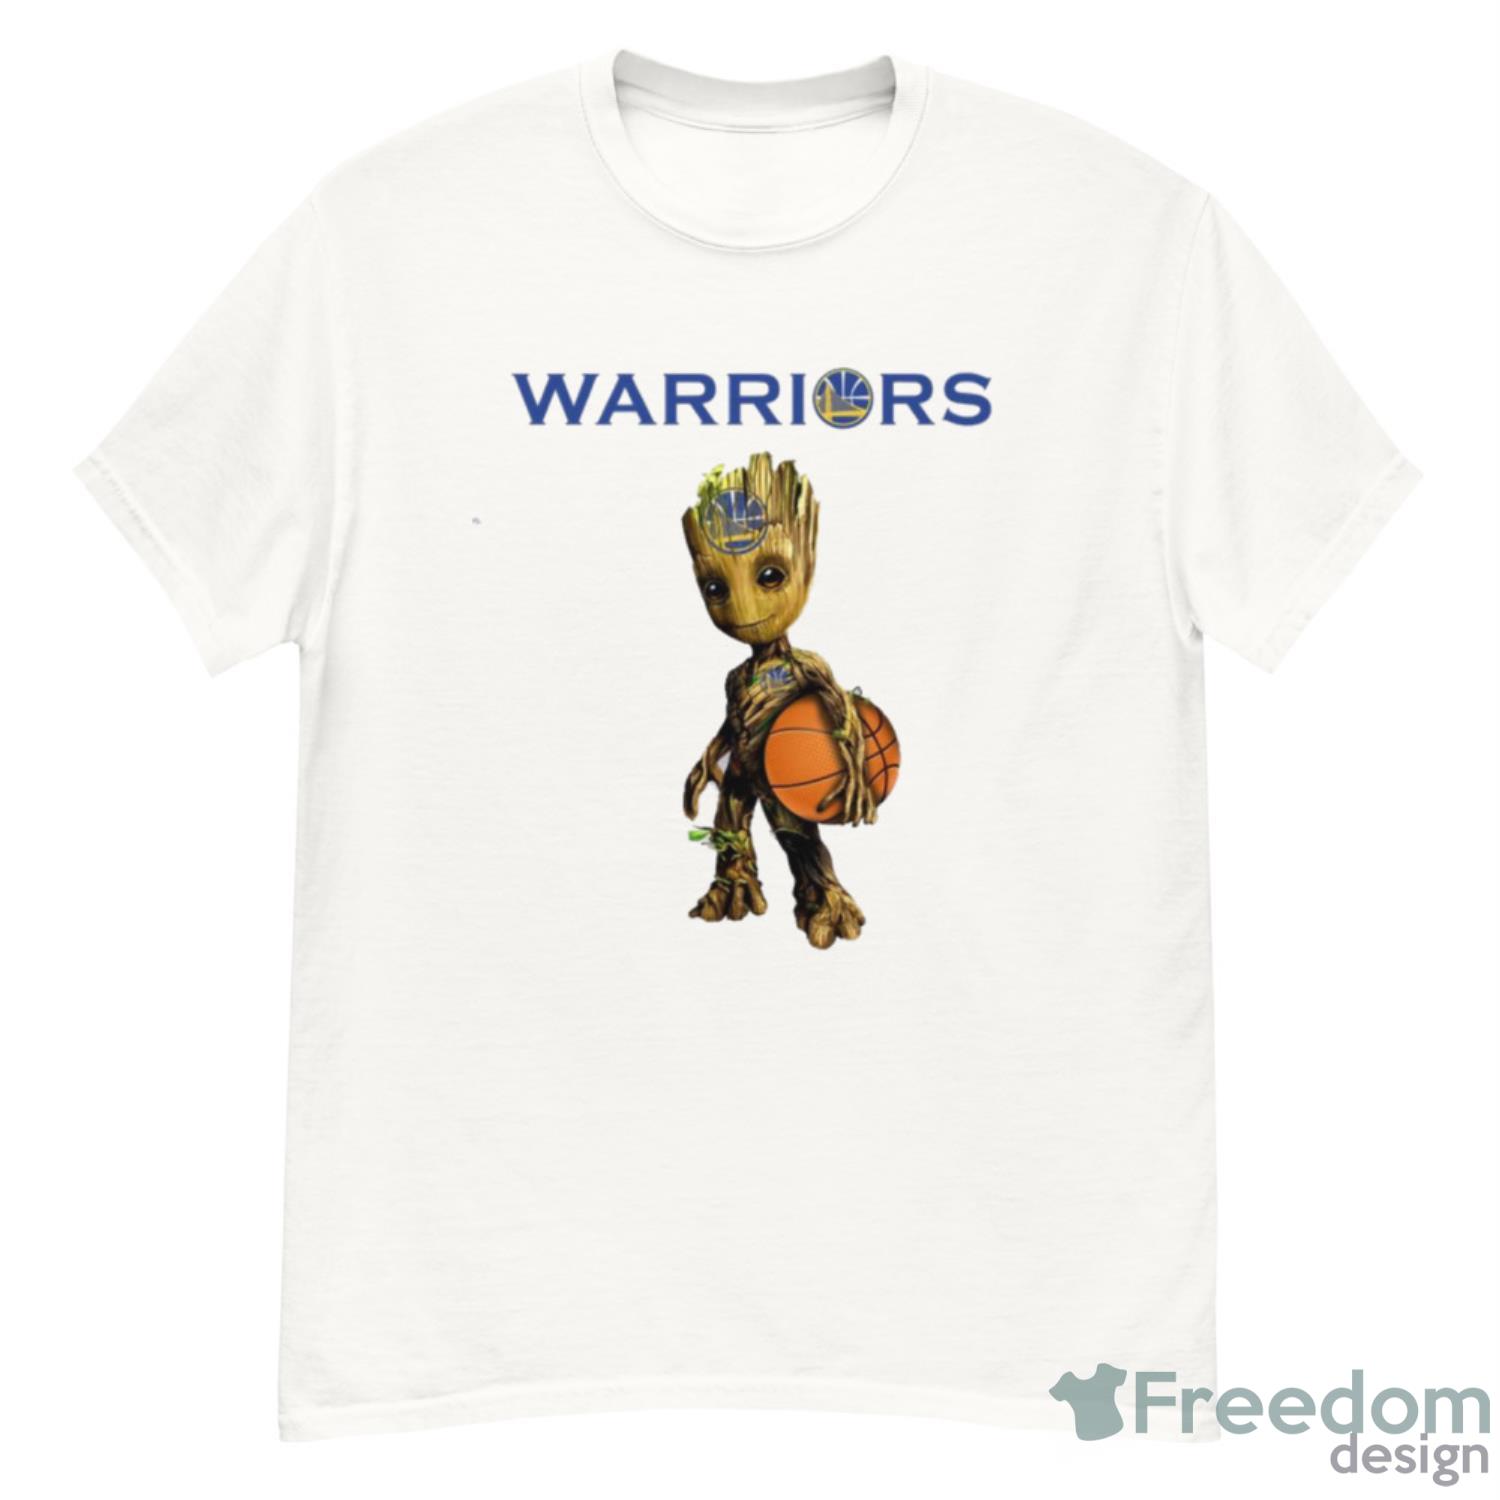 Womens Golden State Warriors Pride Graphic T-Shirt